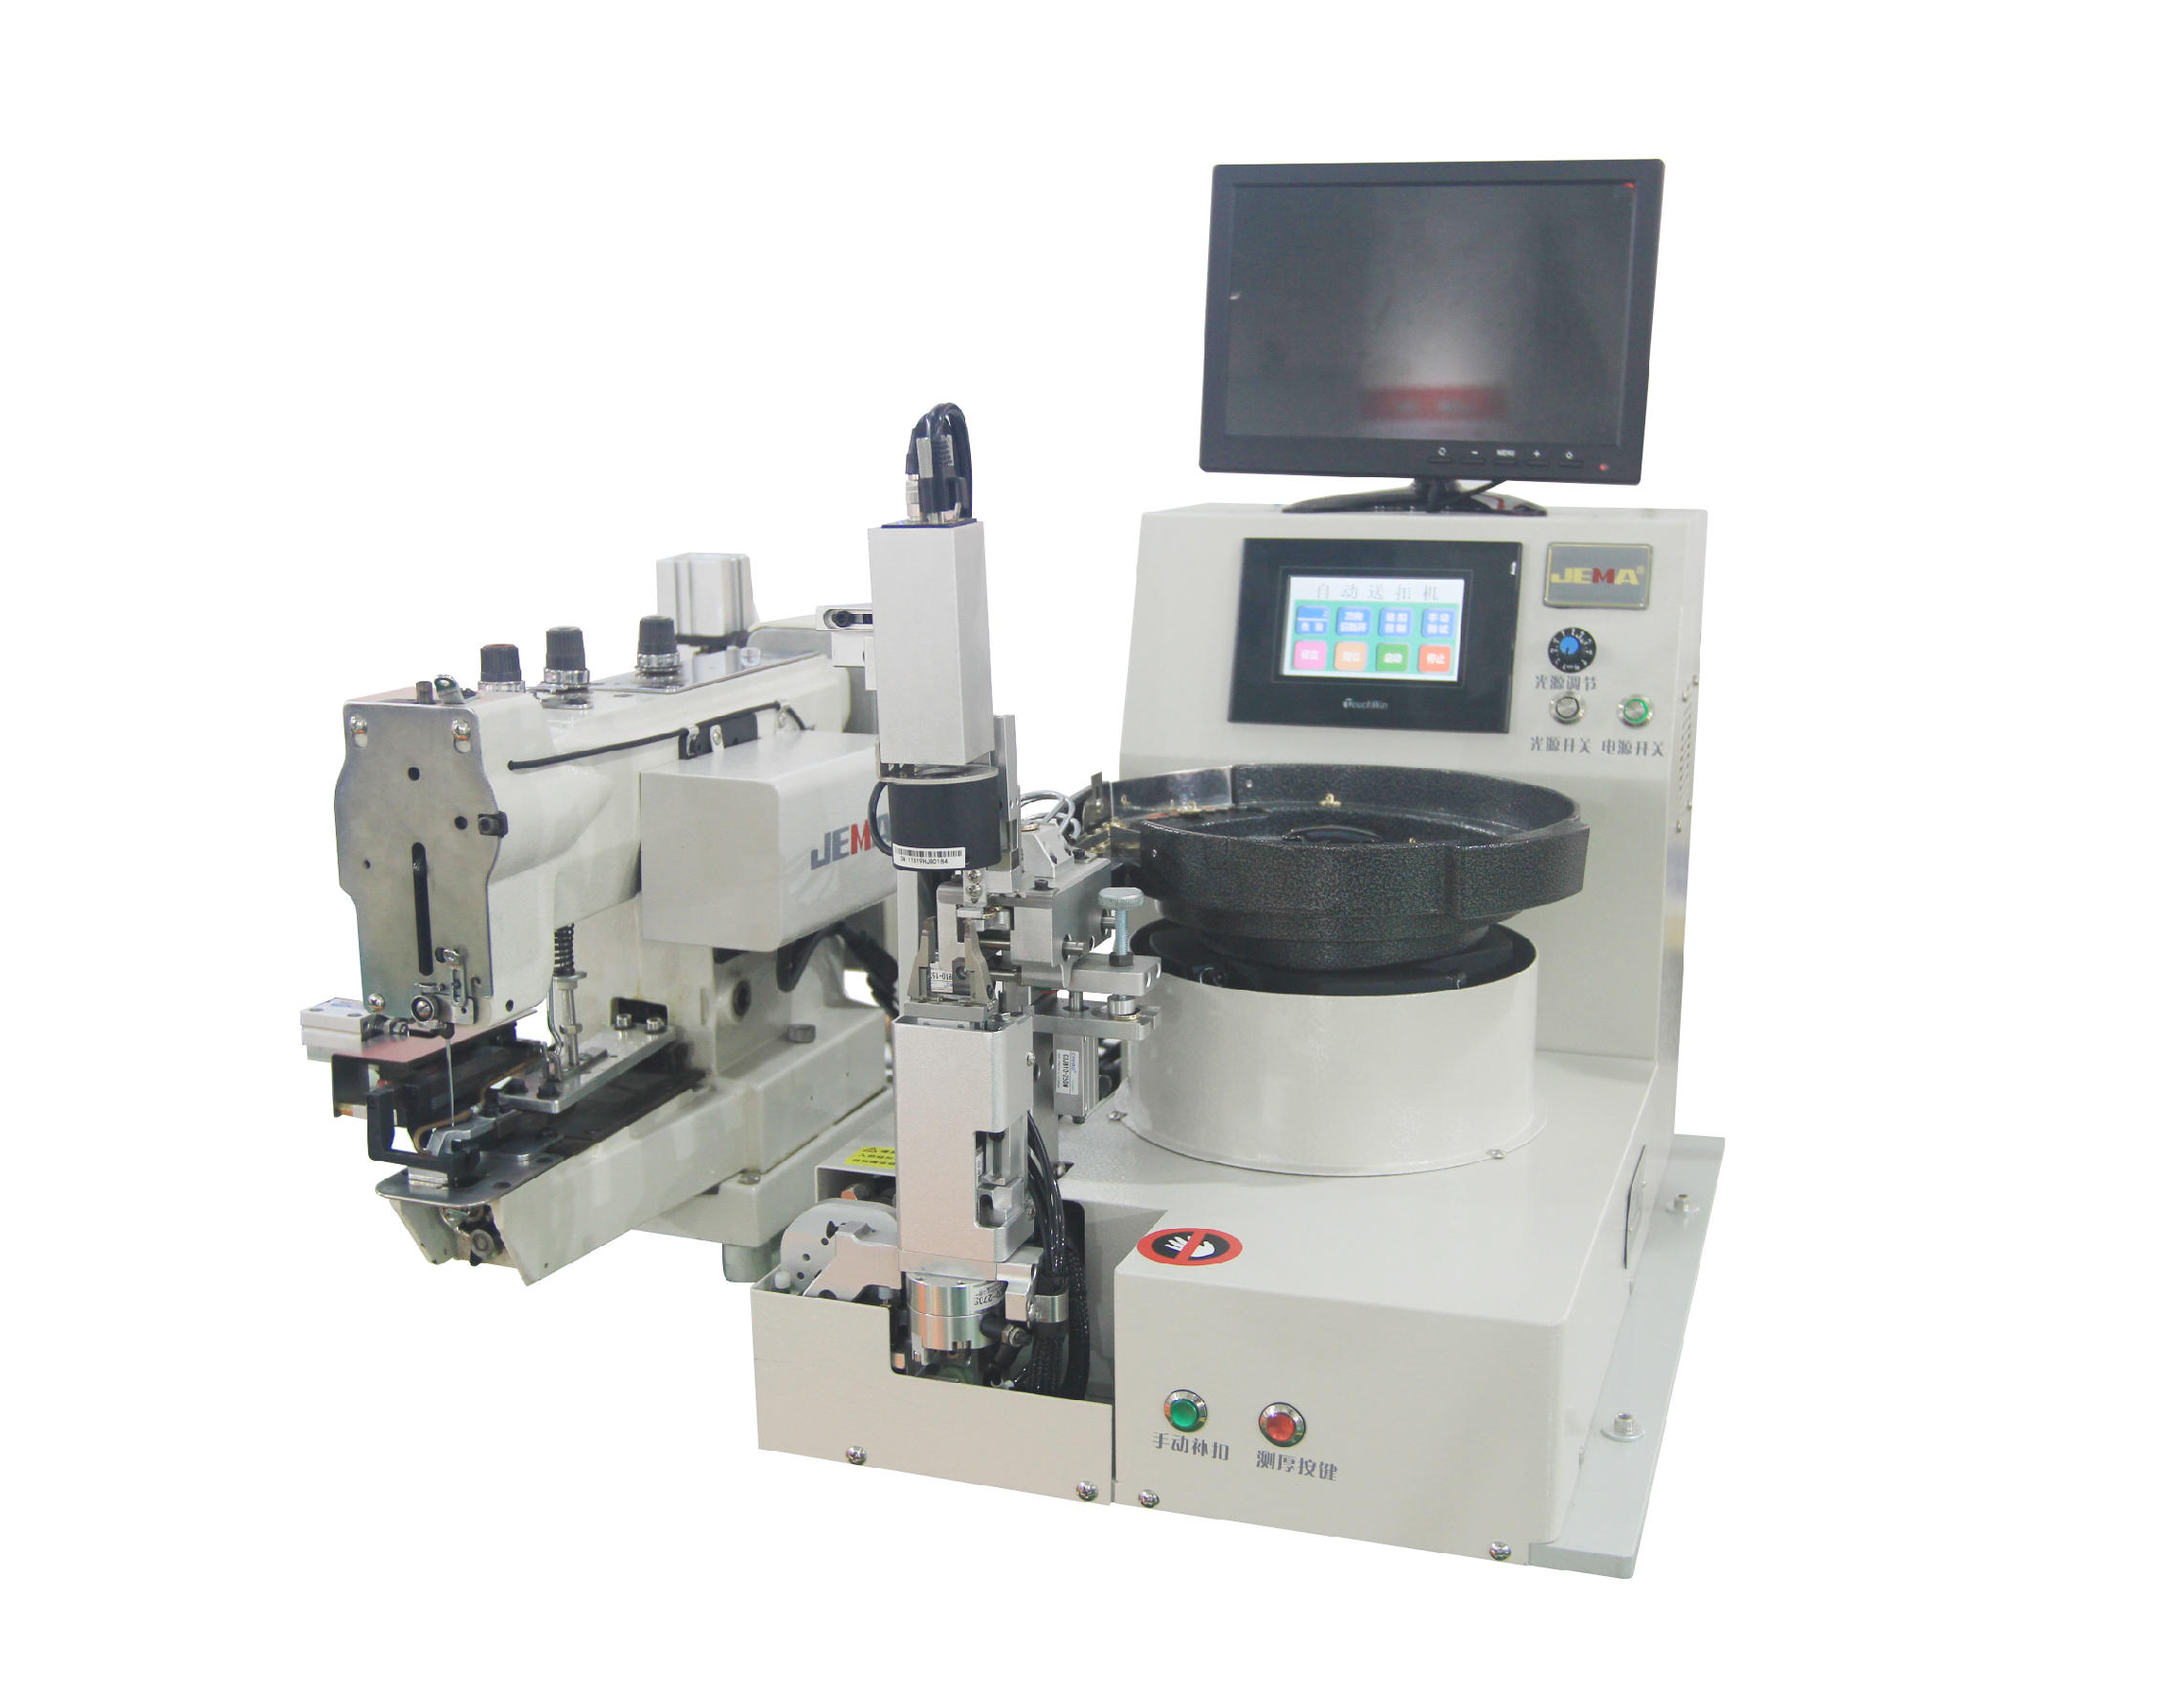 JM-917S LOGO recognition automatic button feeding machine (vertical button) with JM-4-2D direct drive button sewing machine